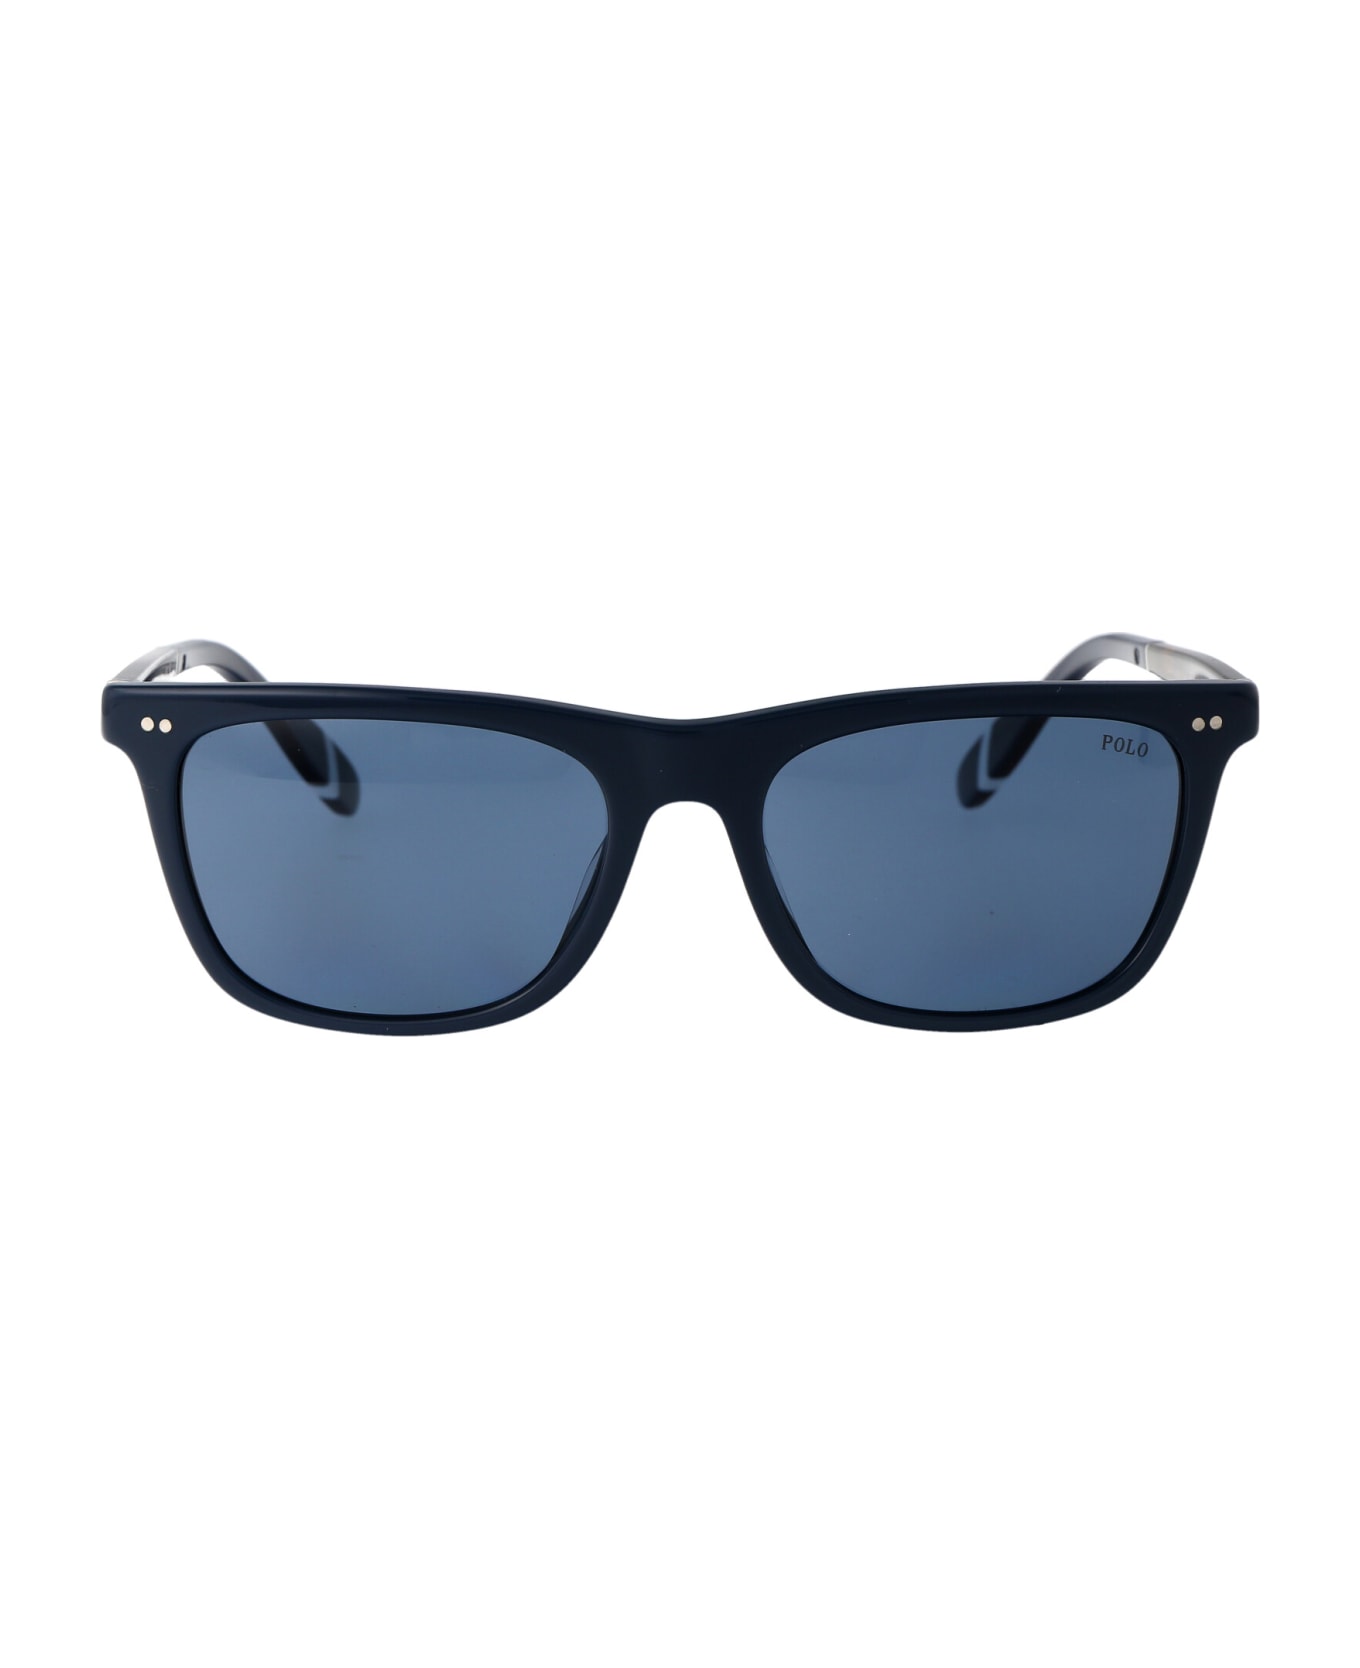 Polo Ralph Lauren 0ph4205u Sunglasses - 546580 Shiny Navy Blue